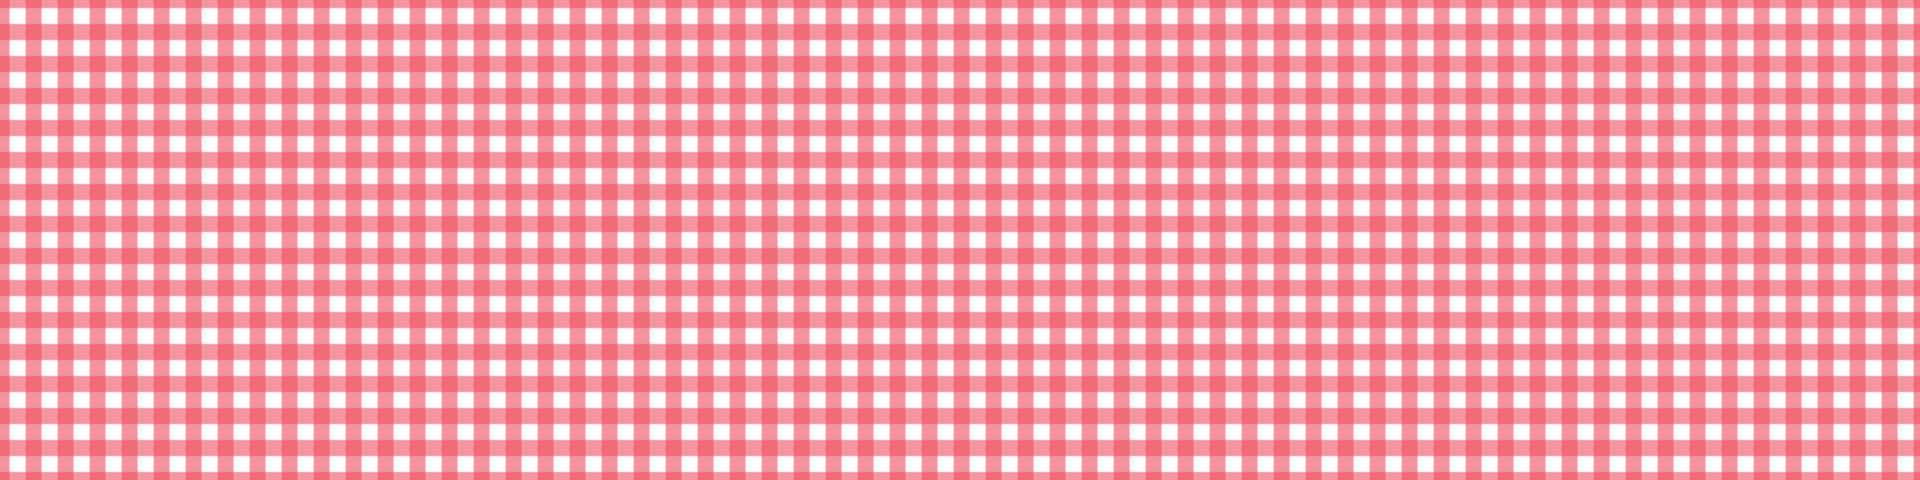 patrón de vichy de picnic rojo. mantel para mesa. textura cuadrada para guinga o tela. ilustración vectorial vector